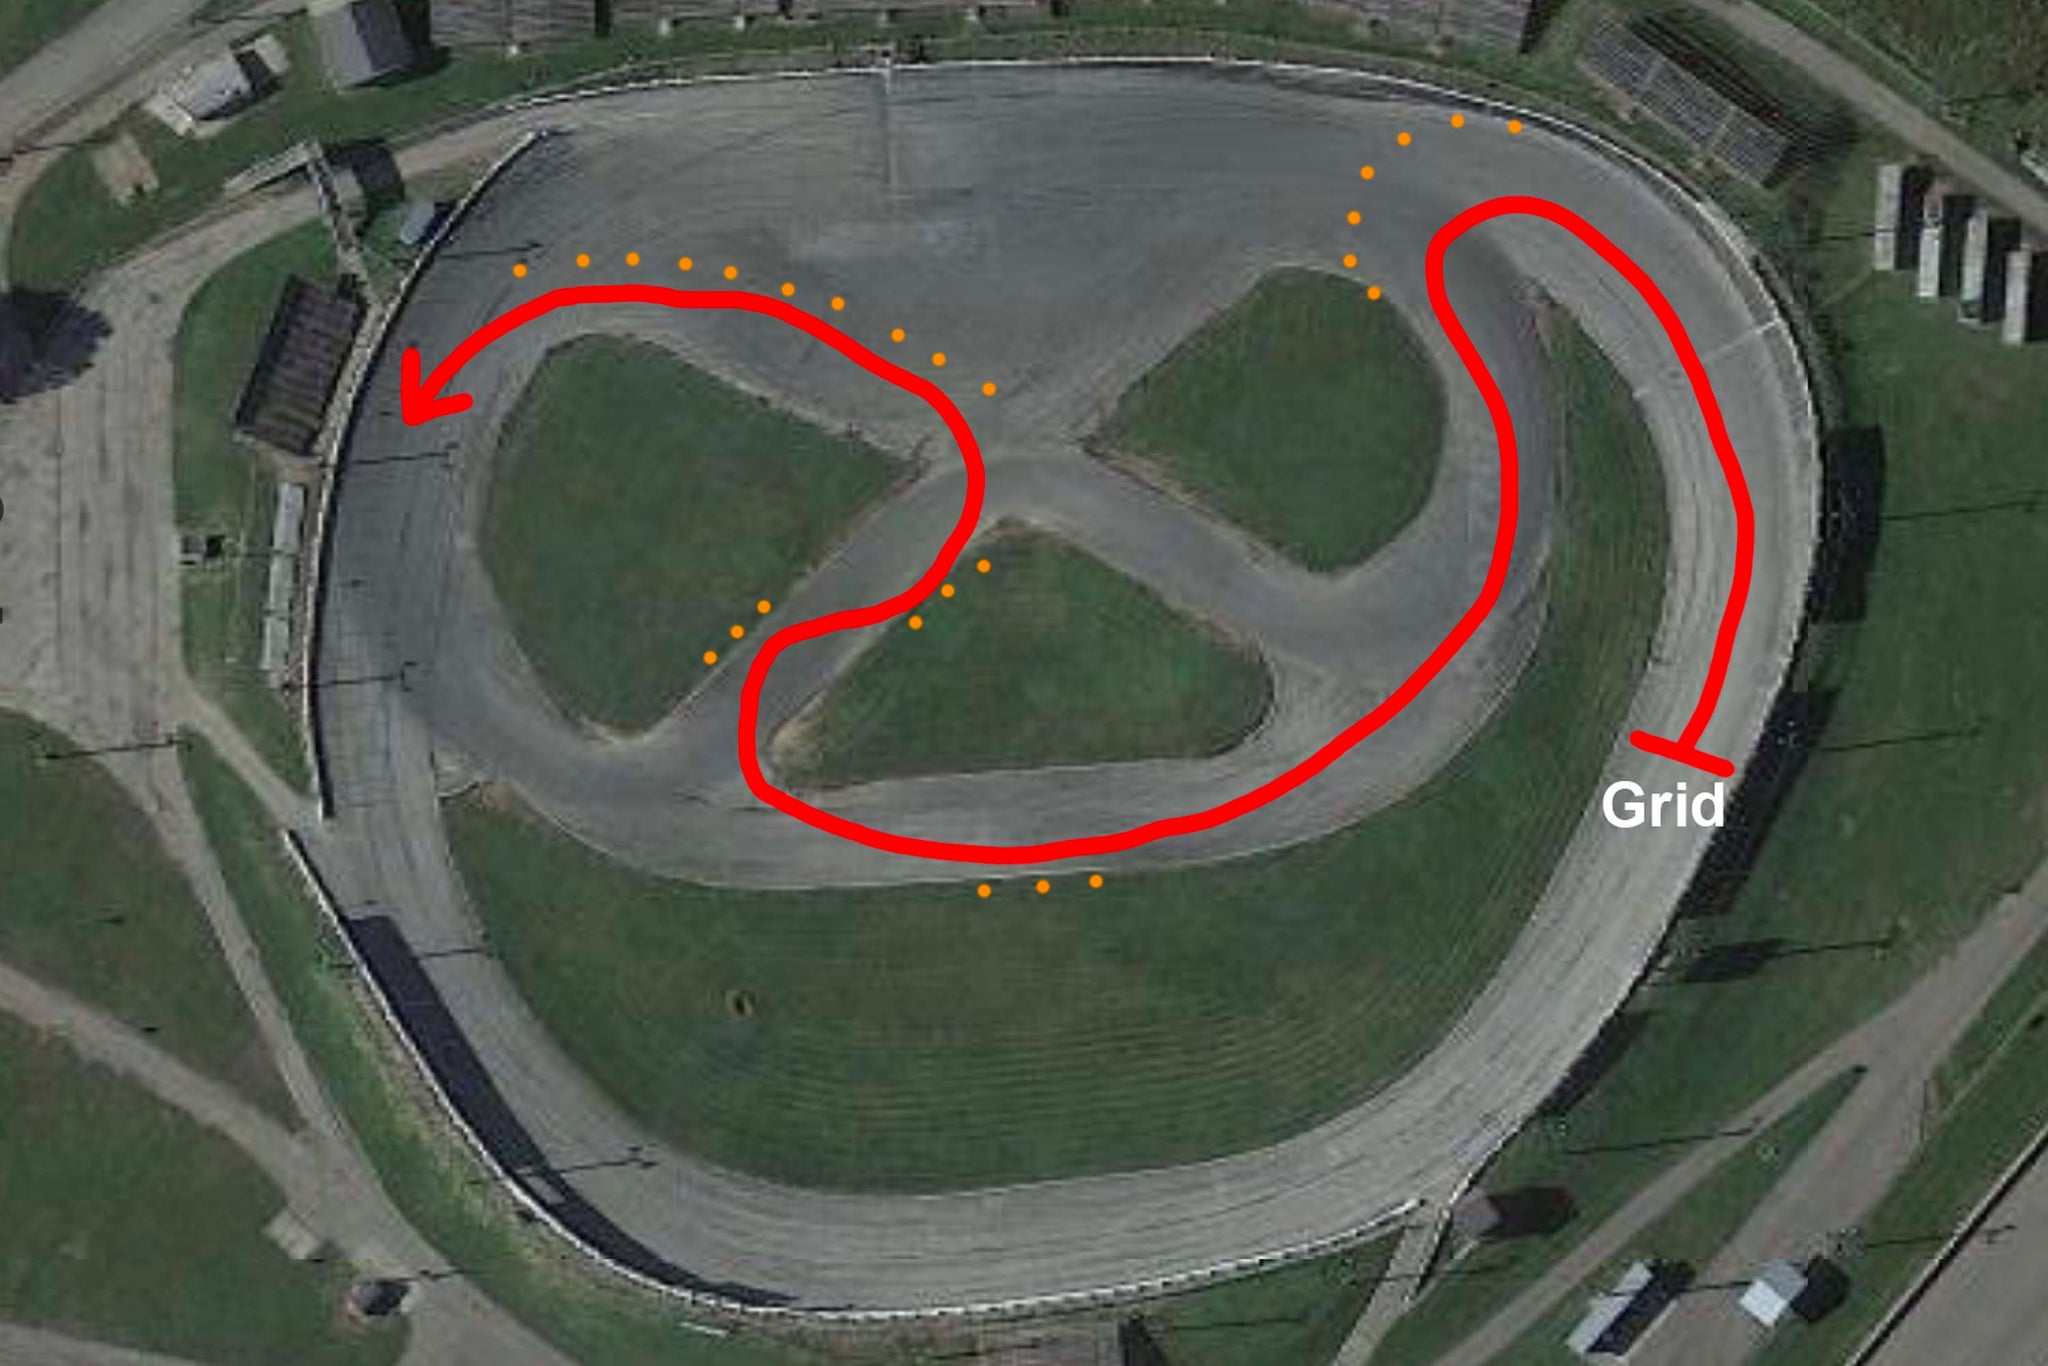 Kil-kare raceway technical layout